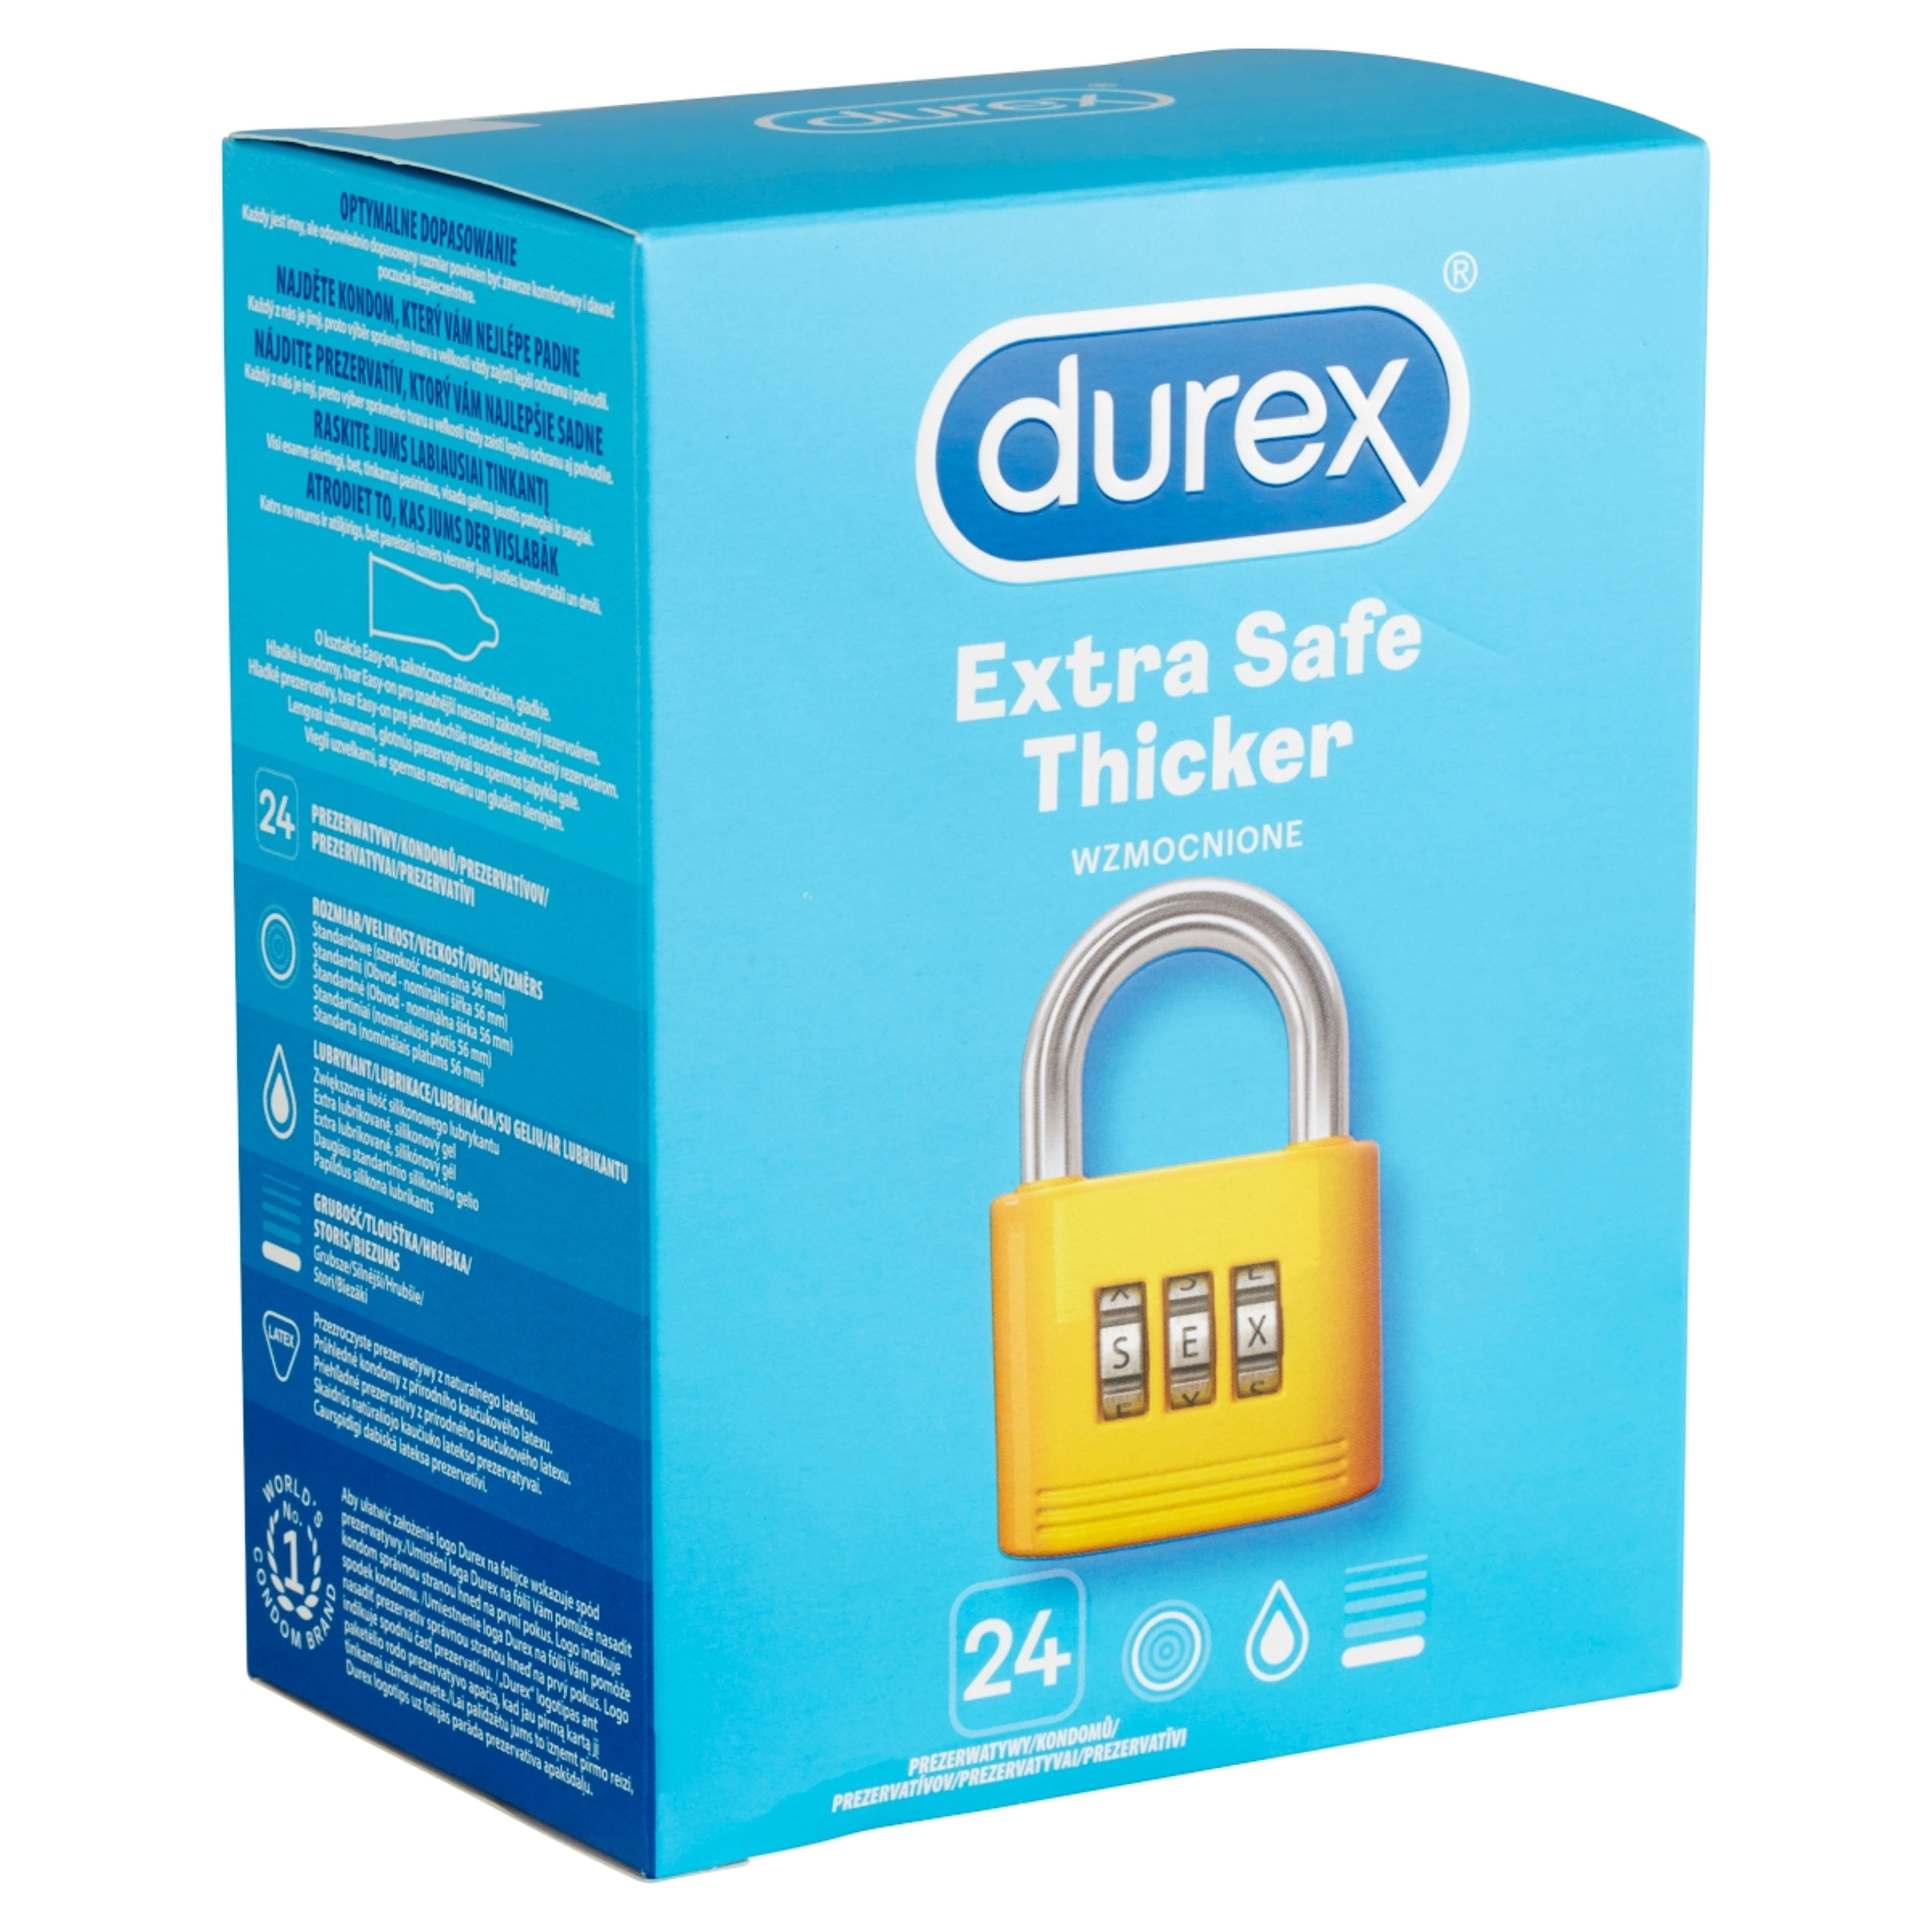 Durex óvszer extra safe - 24 db-2